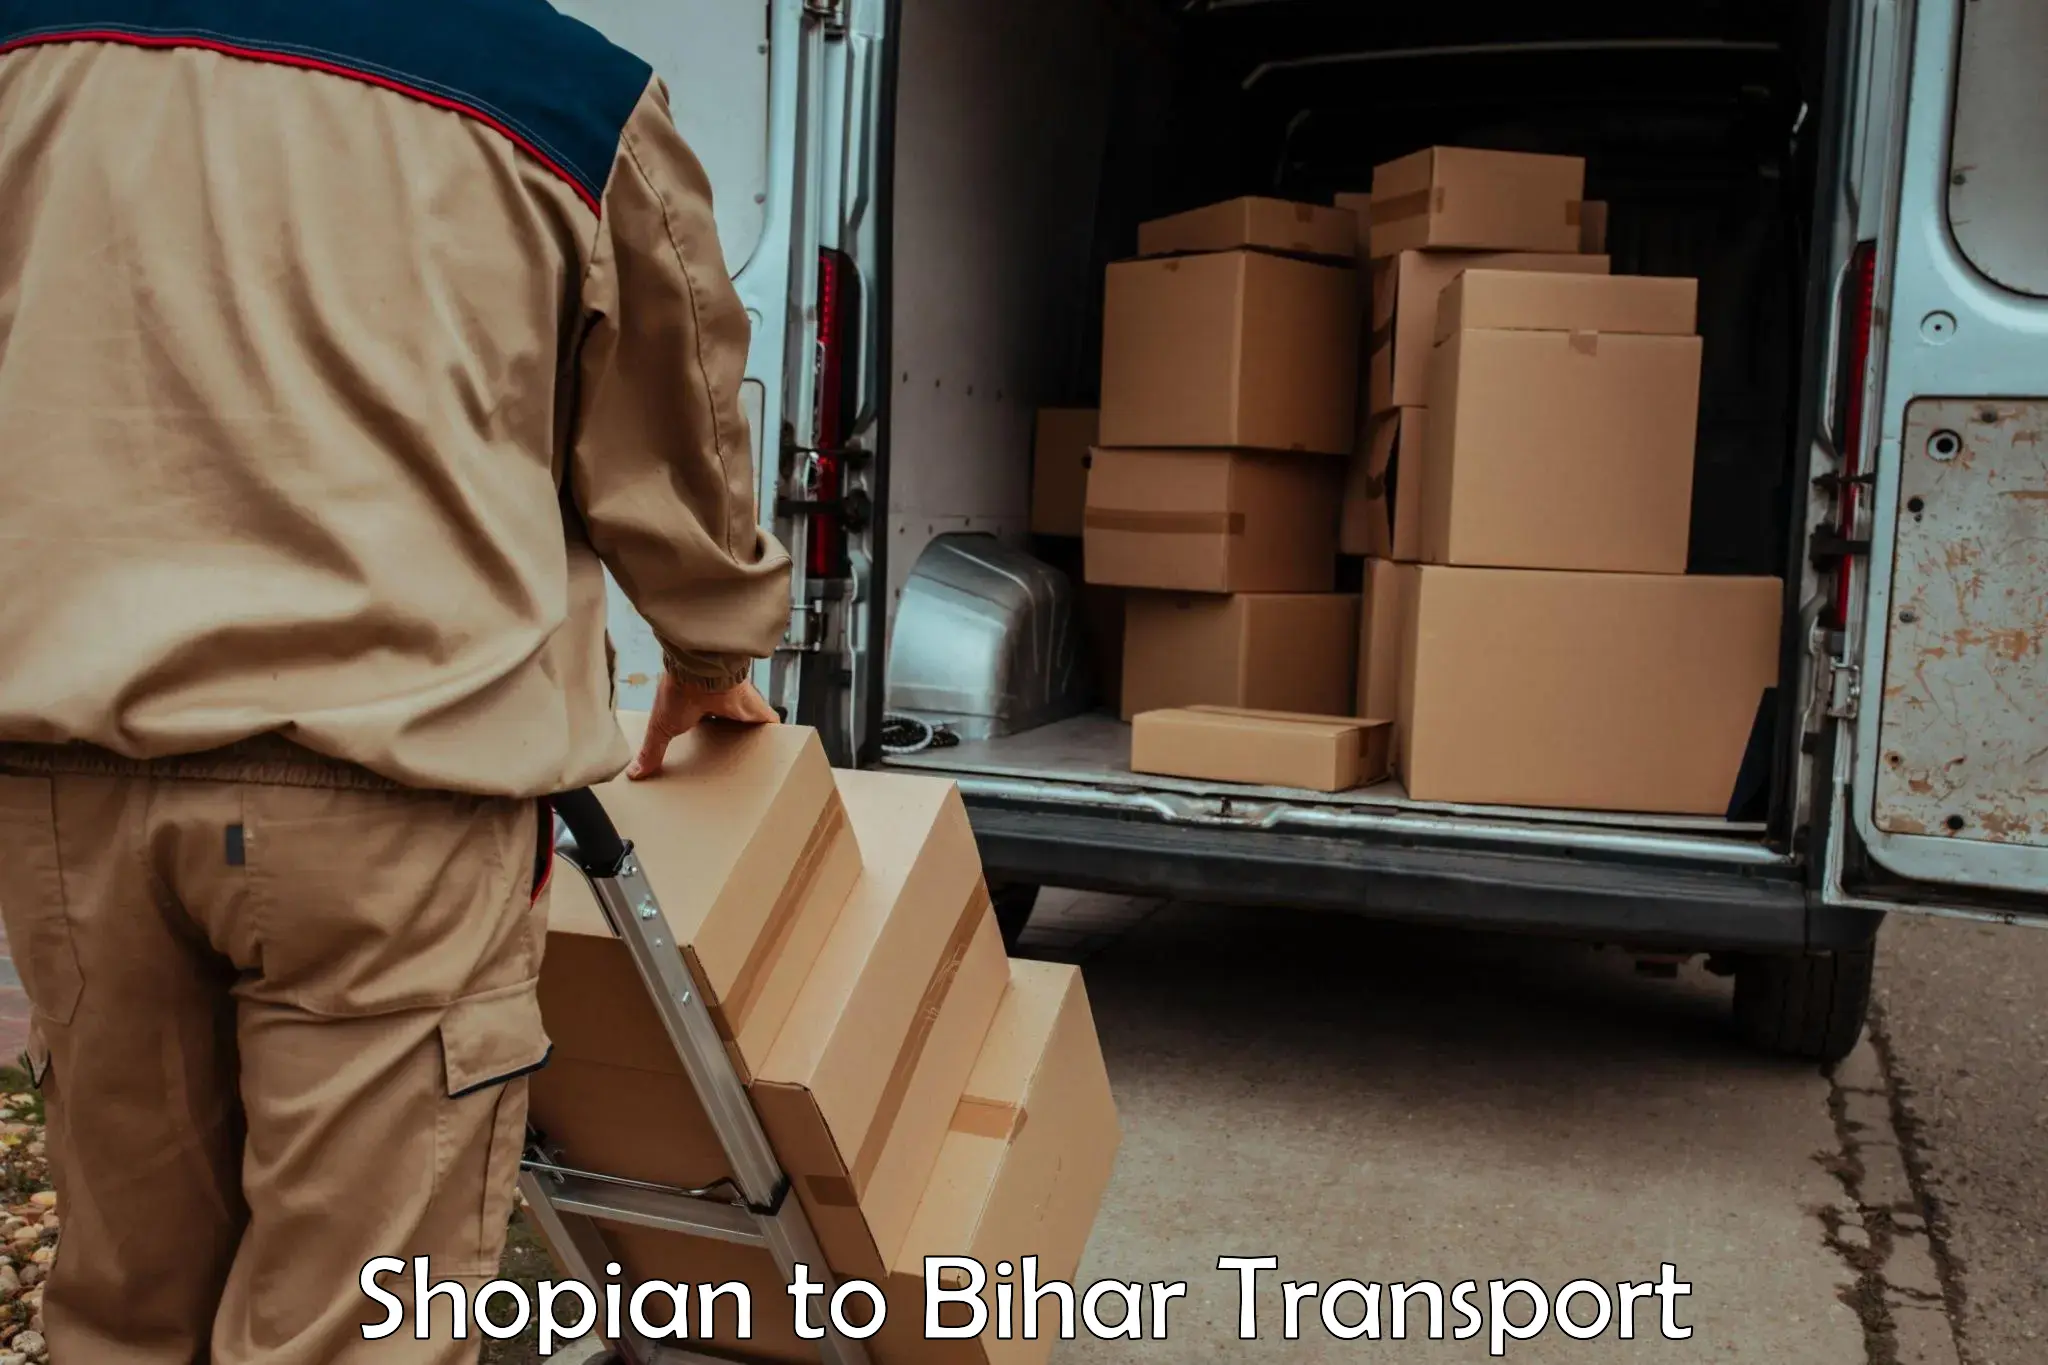 Lorry transport service Shopian to Motihari